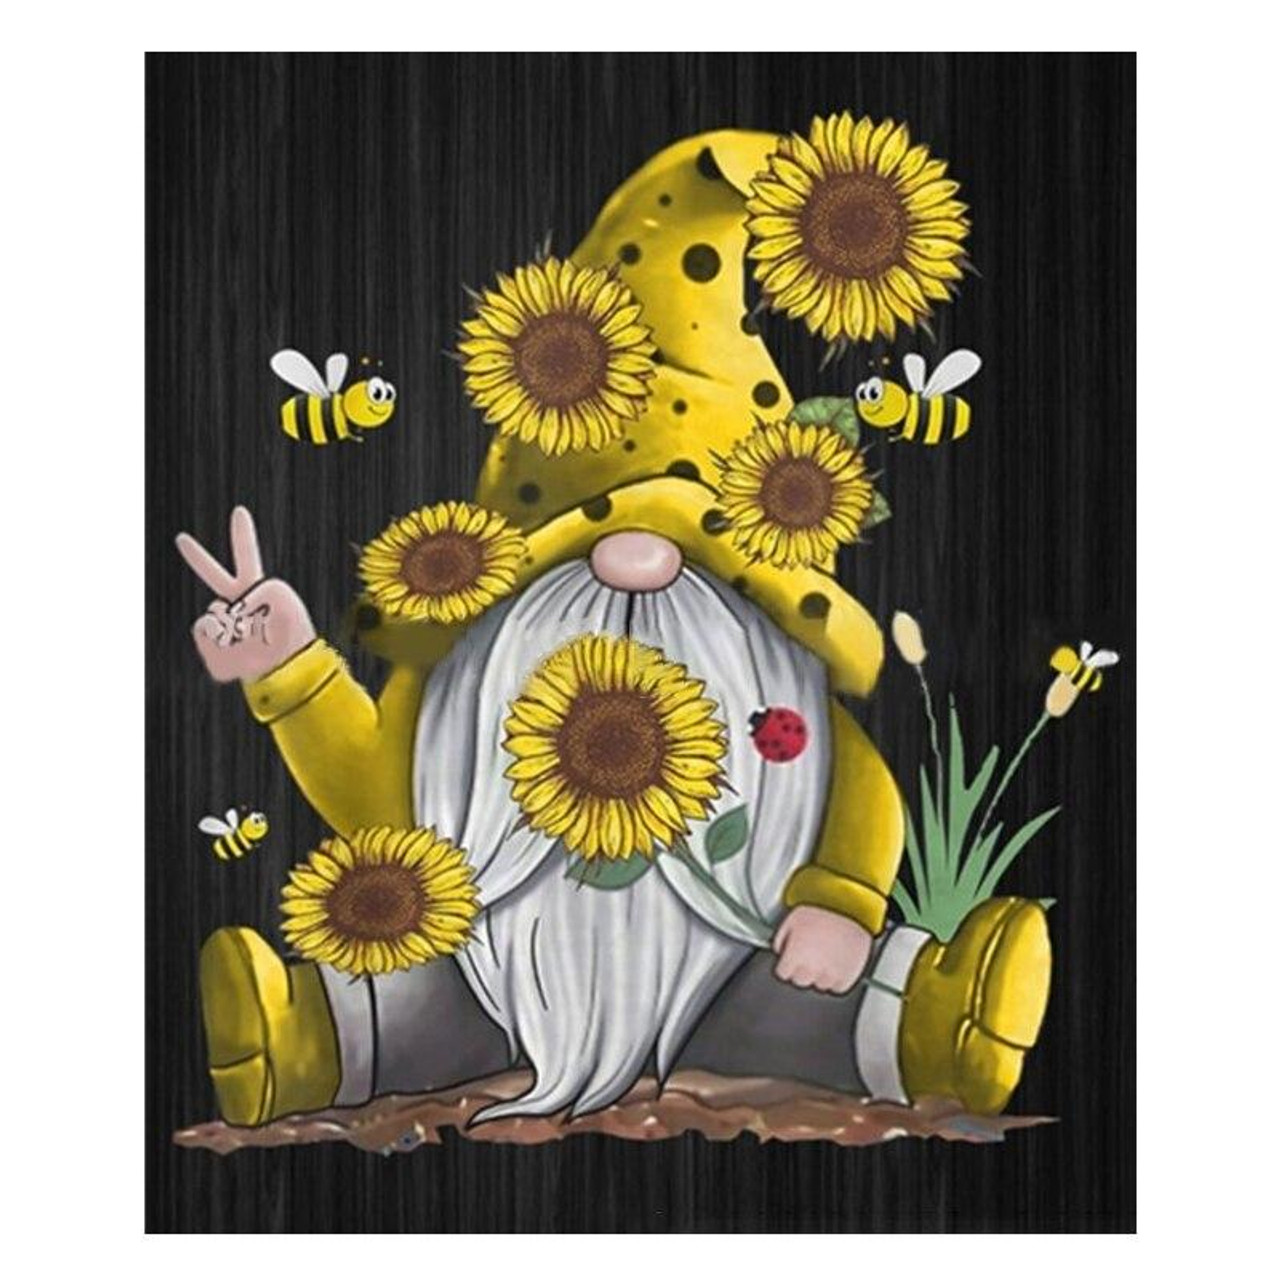 Art Painting of Sunflower, 5D Diamond Painting Kits